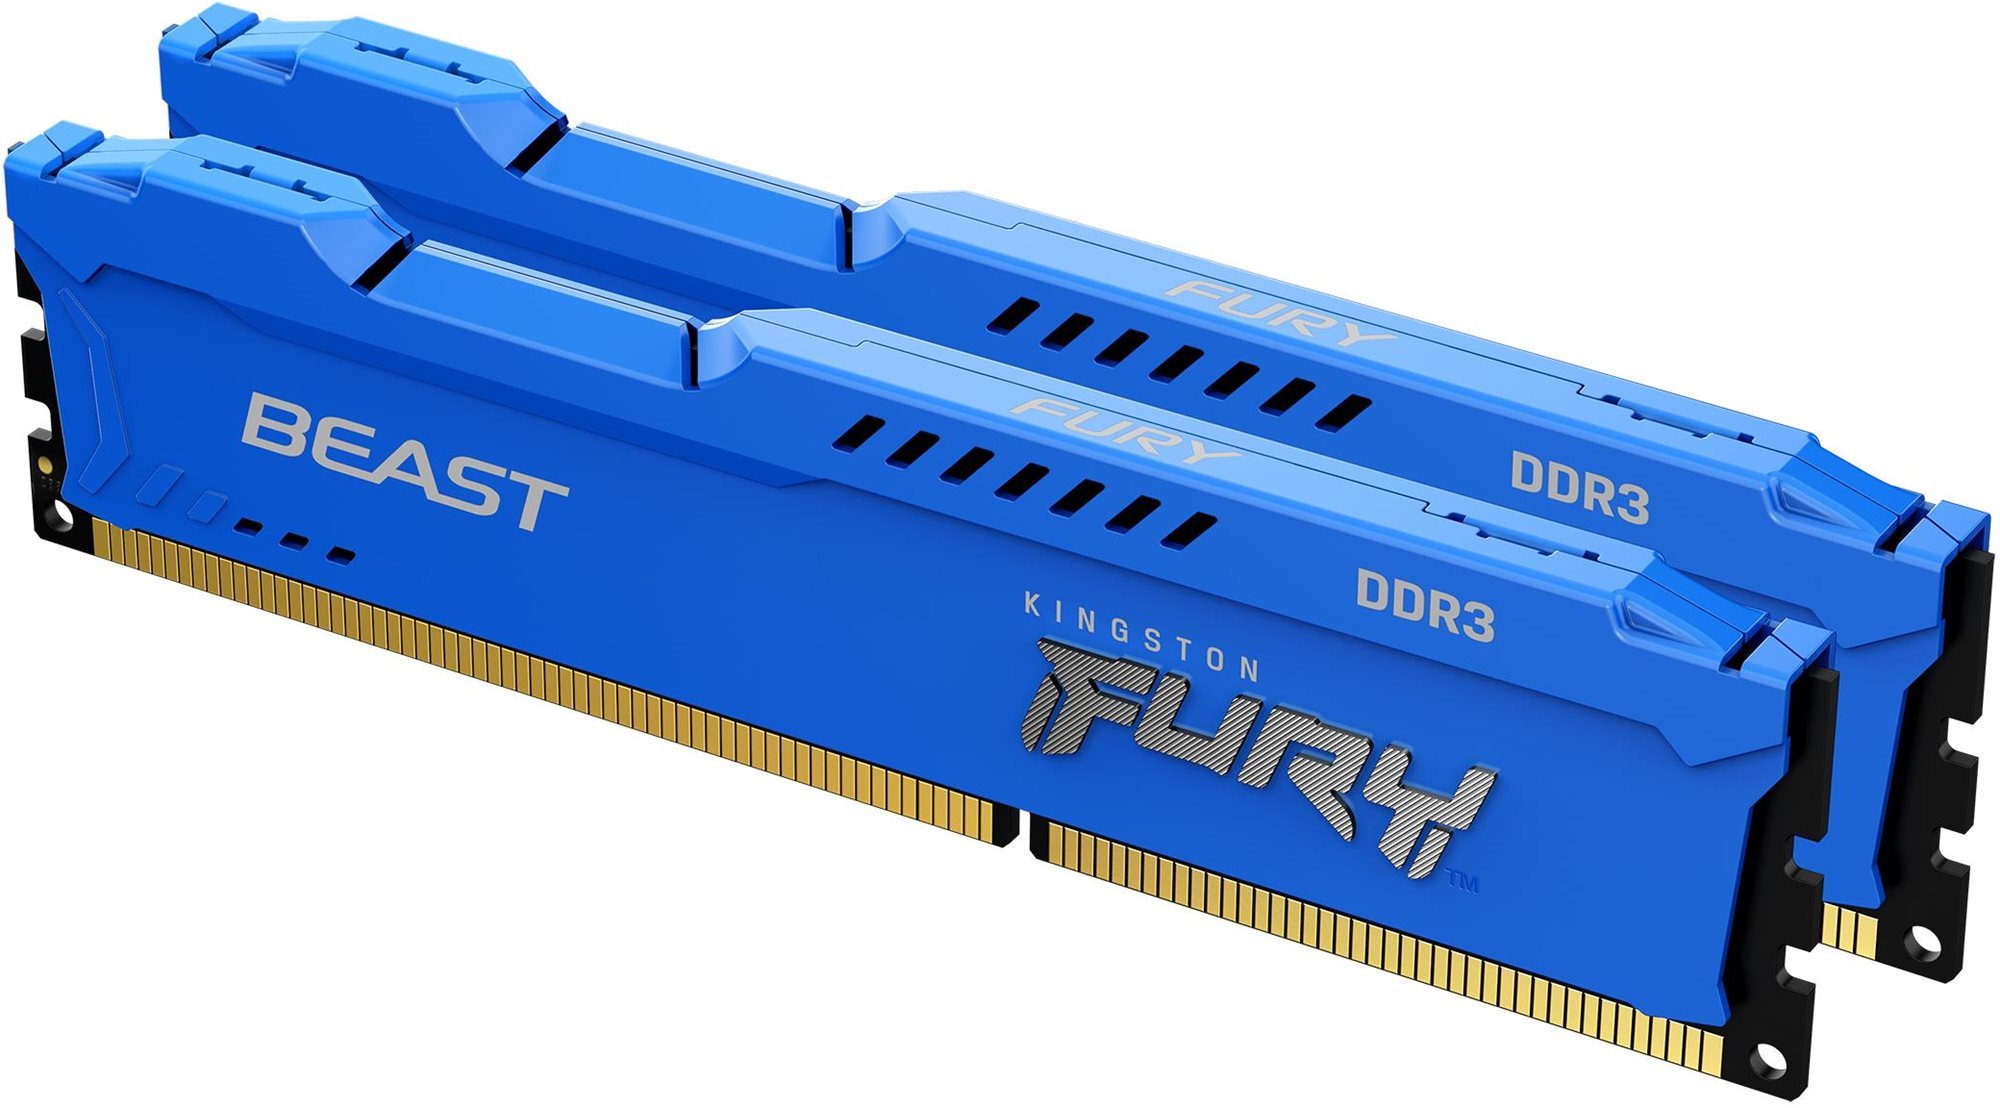 RAM memória Kingston FURY 8GB KIT DDR3 1600MHz CL10 Beast Blue